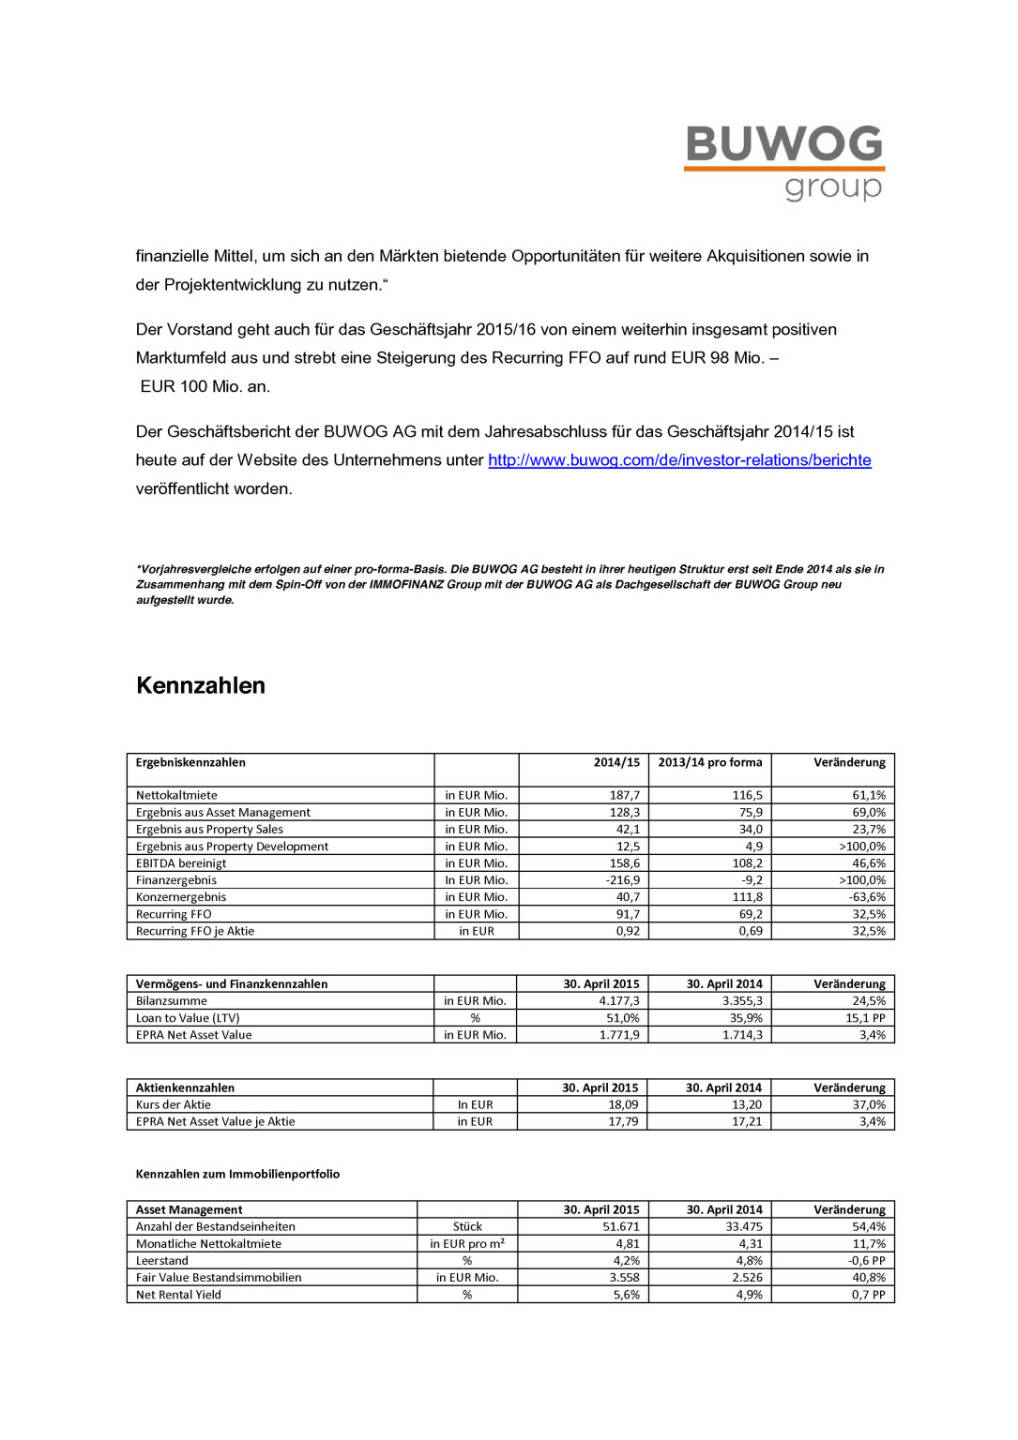 Buwog AG: Ergebnisse Geschäftsjahr 2014/15, Seite 3/4, komplettes Dokument unter http://boerse-social.com/static/uploads/file_334_buwog_ag_ergebnisse_geschäftsjahr_201415.pdf